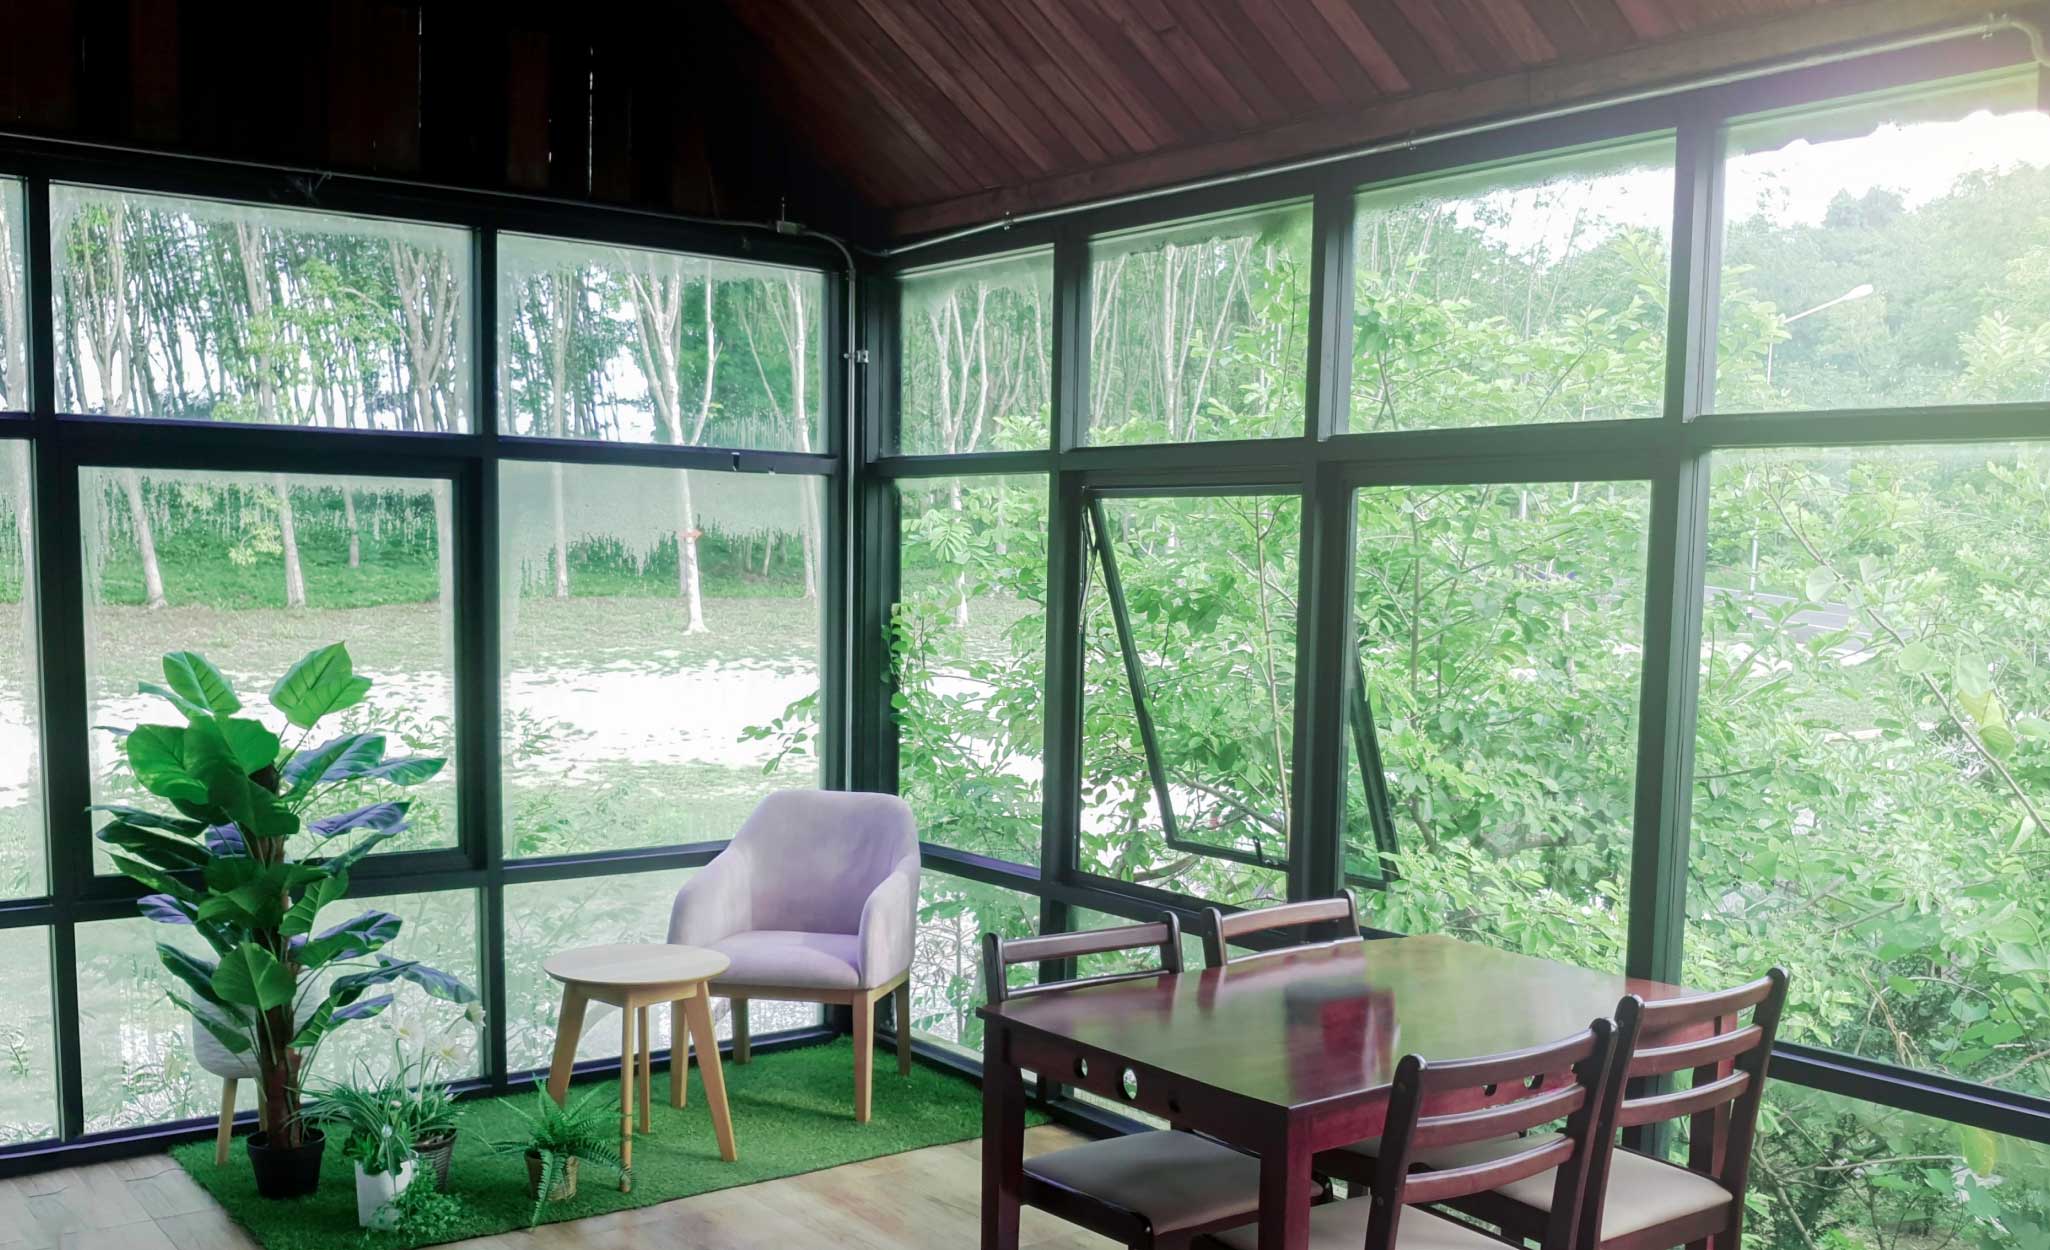 An open window brings fresh air into a room.